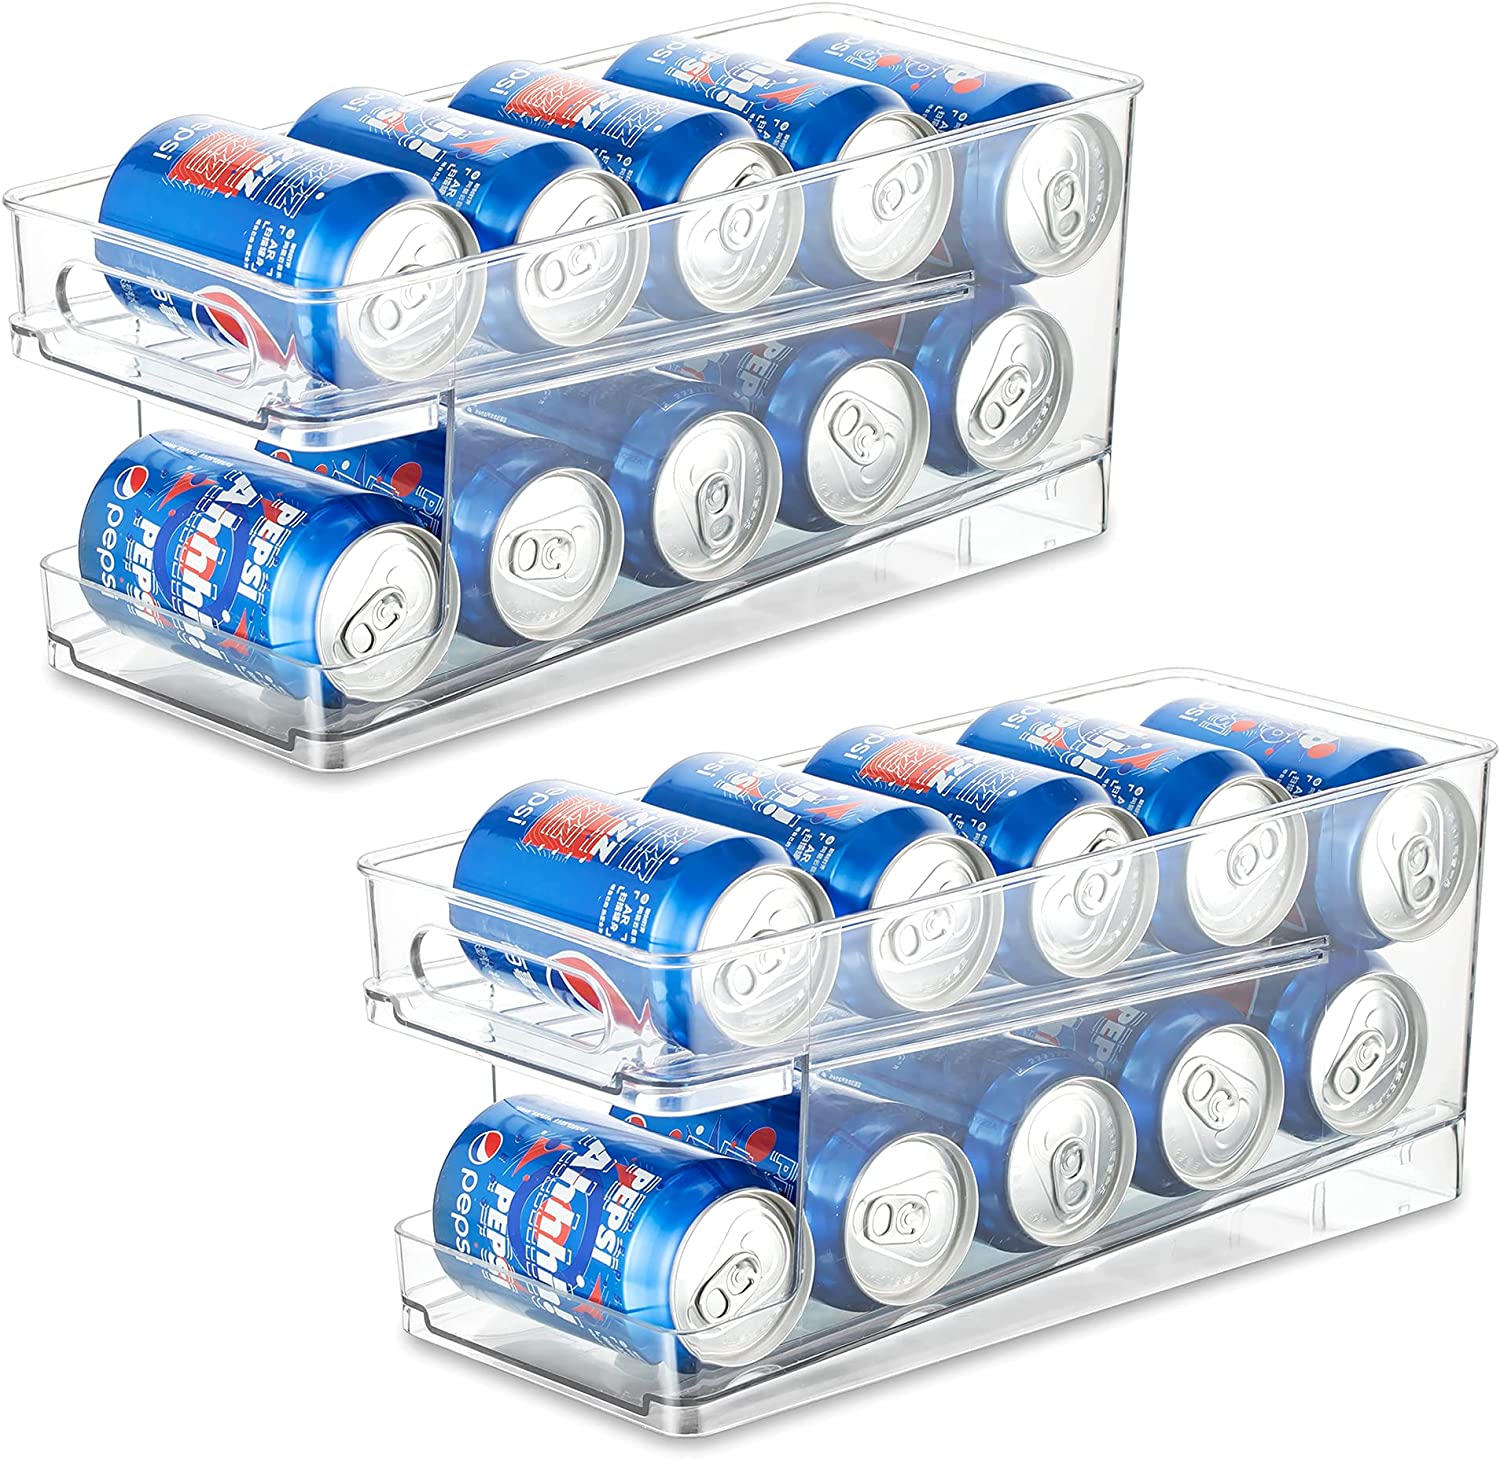 2-Tier Auto-Scrolling Refrigerator Drinks Can Bottle Organizer Bottle Holder for Fridge